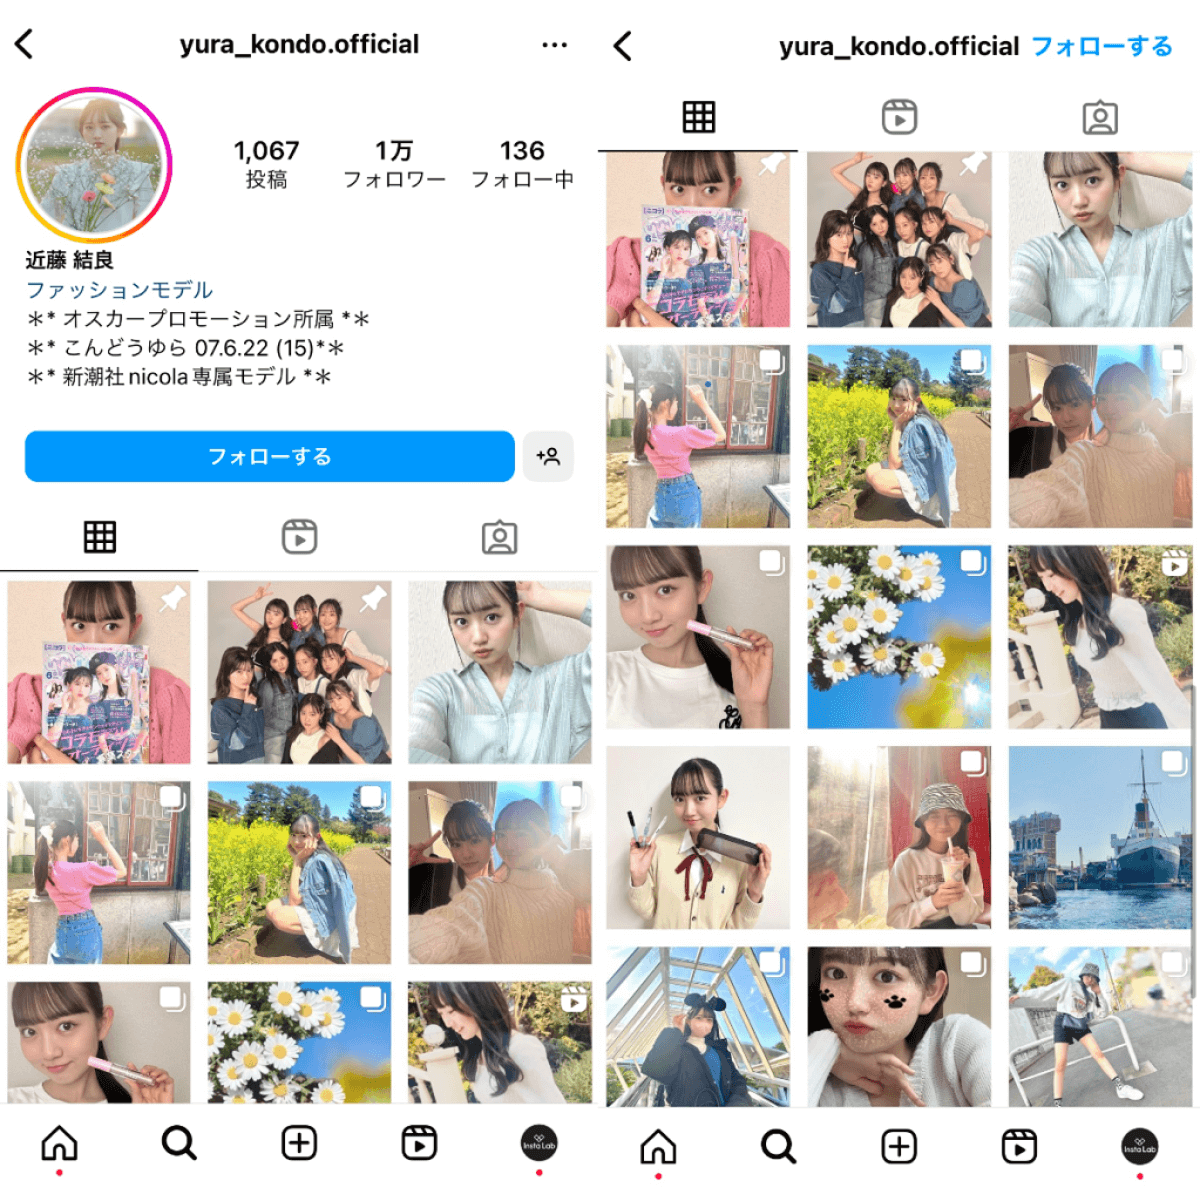 instagram-account-yura-kondo-official